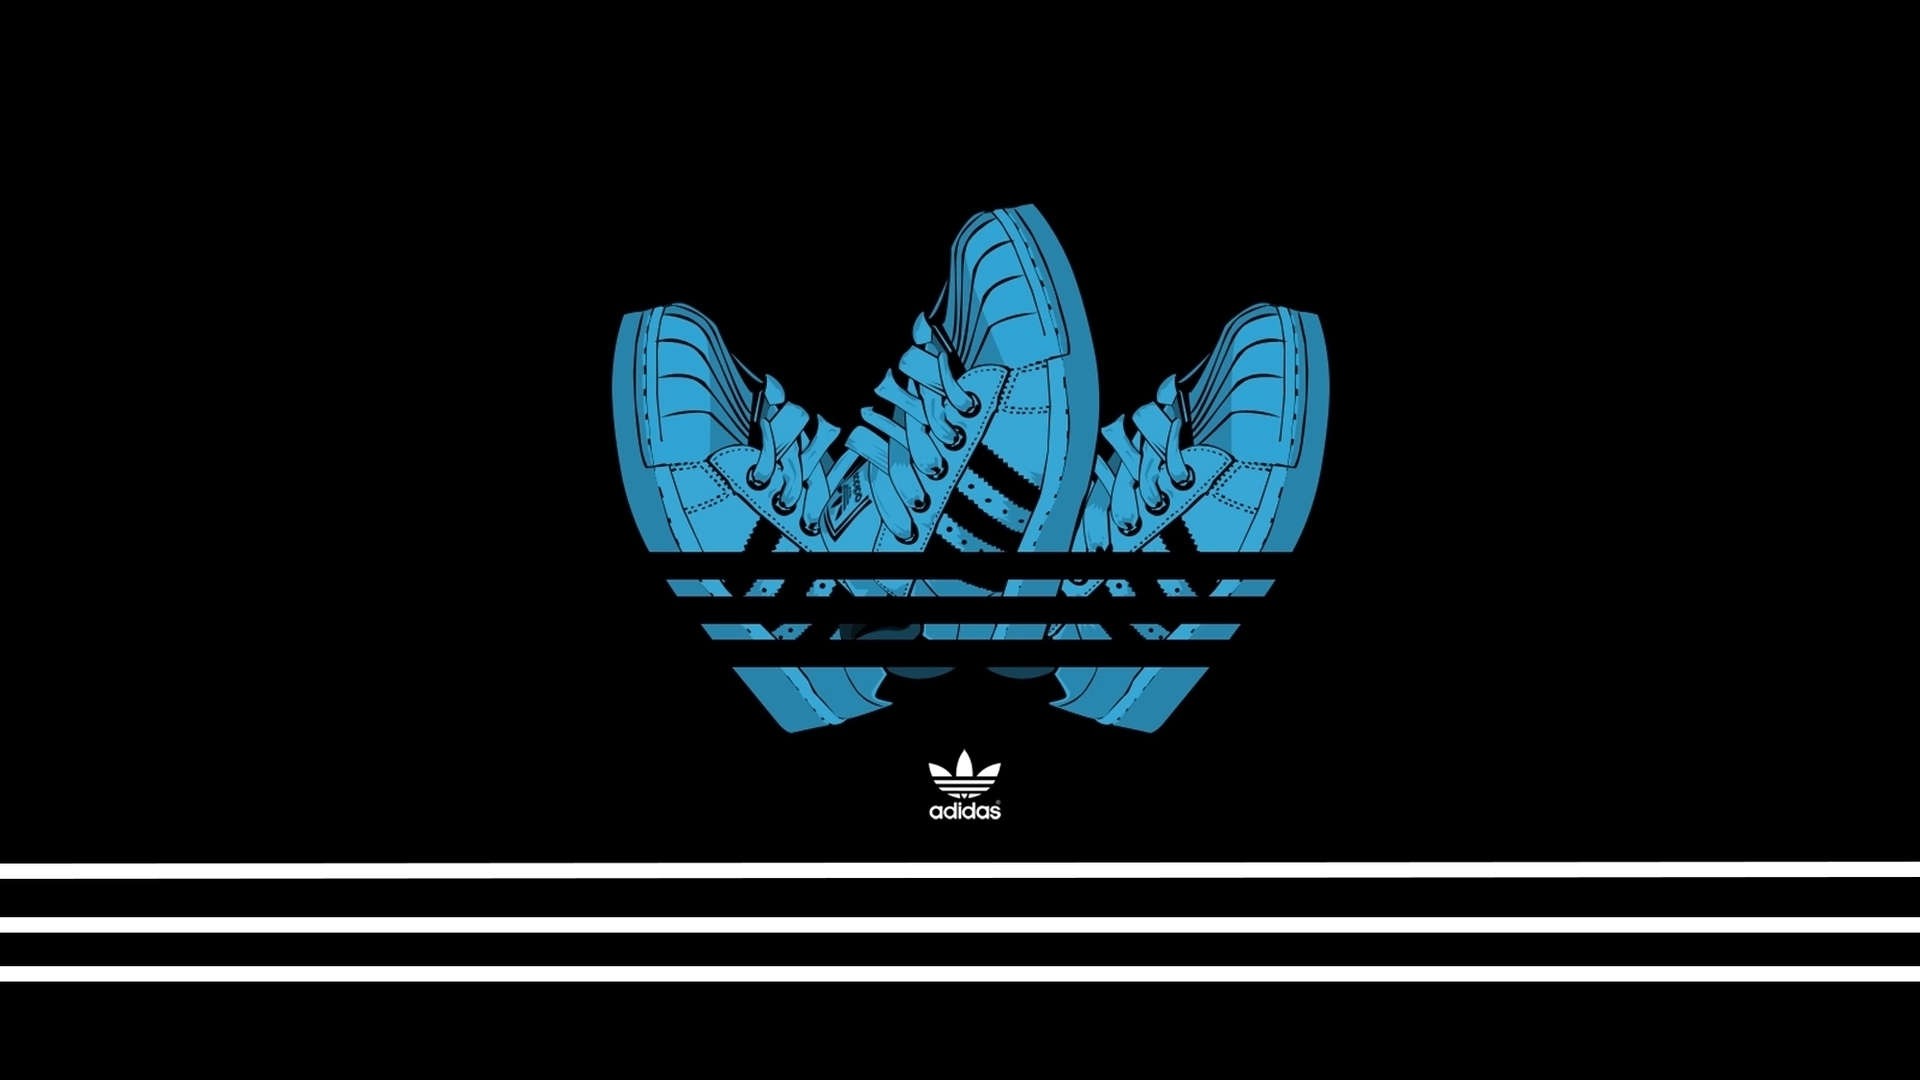 Adidas Creative Logo Design for 1920 x 1080 HDTV 1080p resolution